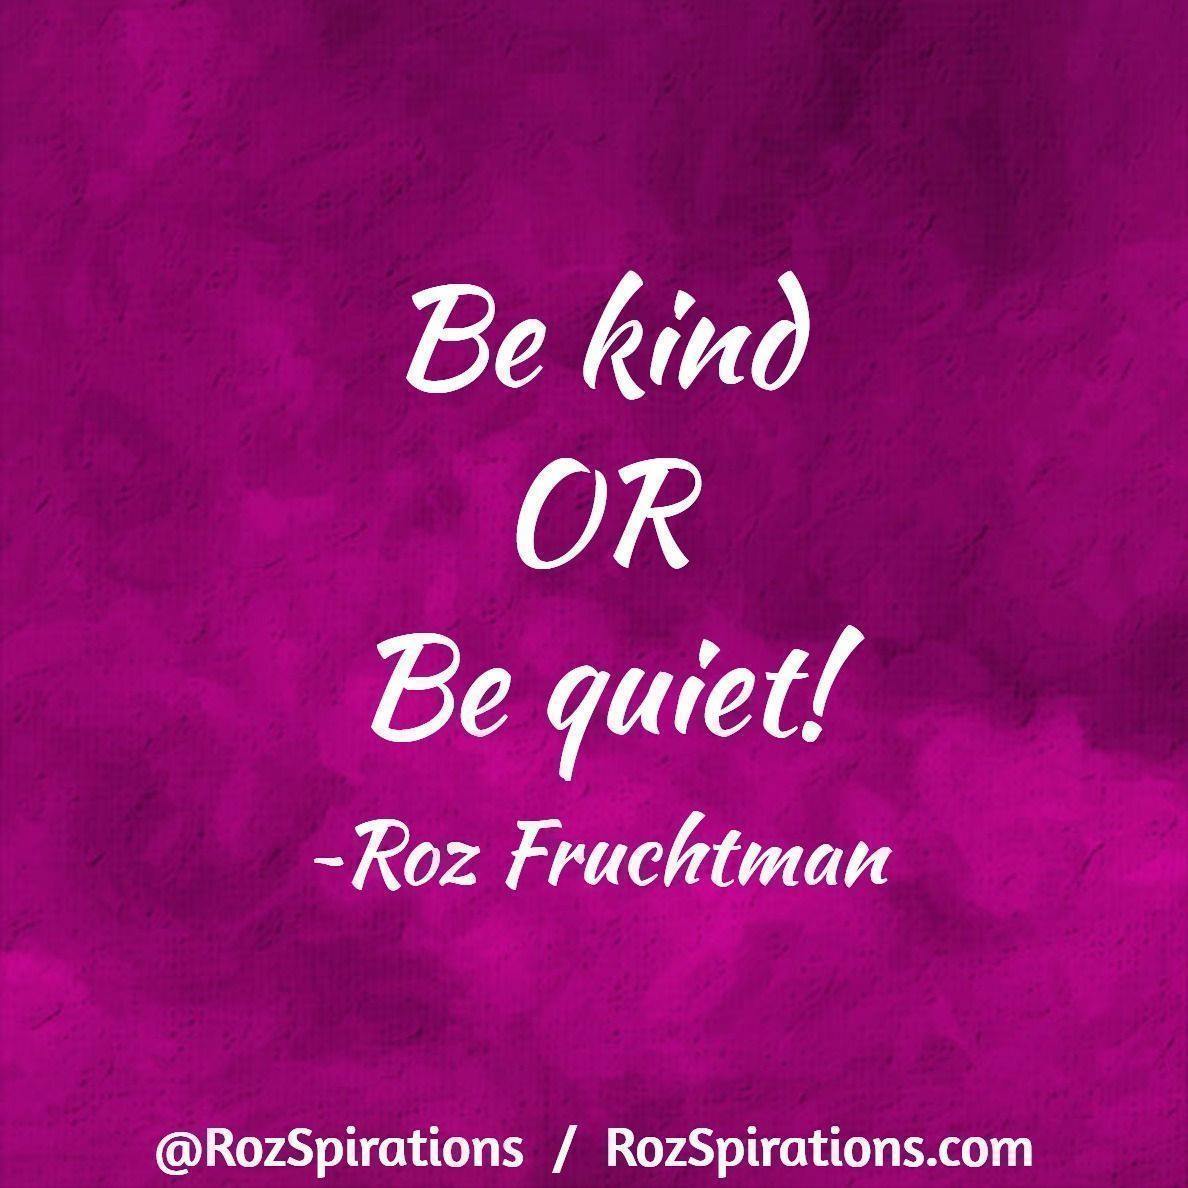 Be kind OR Be quiet! ~Roz Fruchtman #RozSpirations

#RozSpirations #InspirationalInfluencer #LoveTrain #JoyTrain #SuccessTrain #qotd #quote #quotes